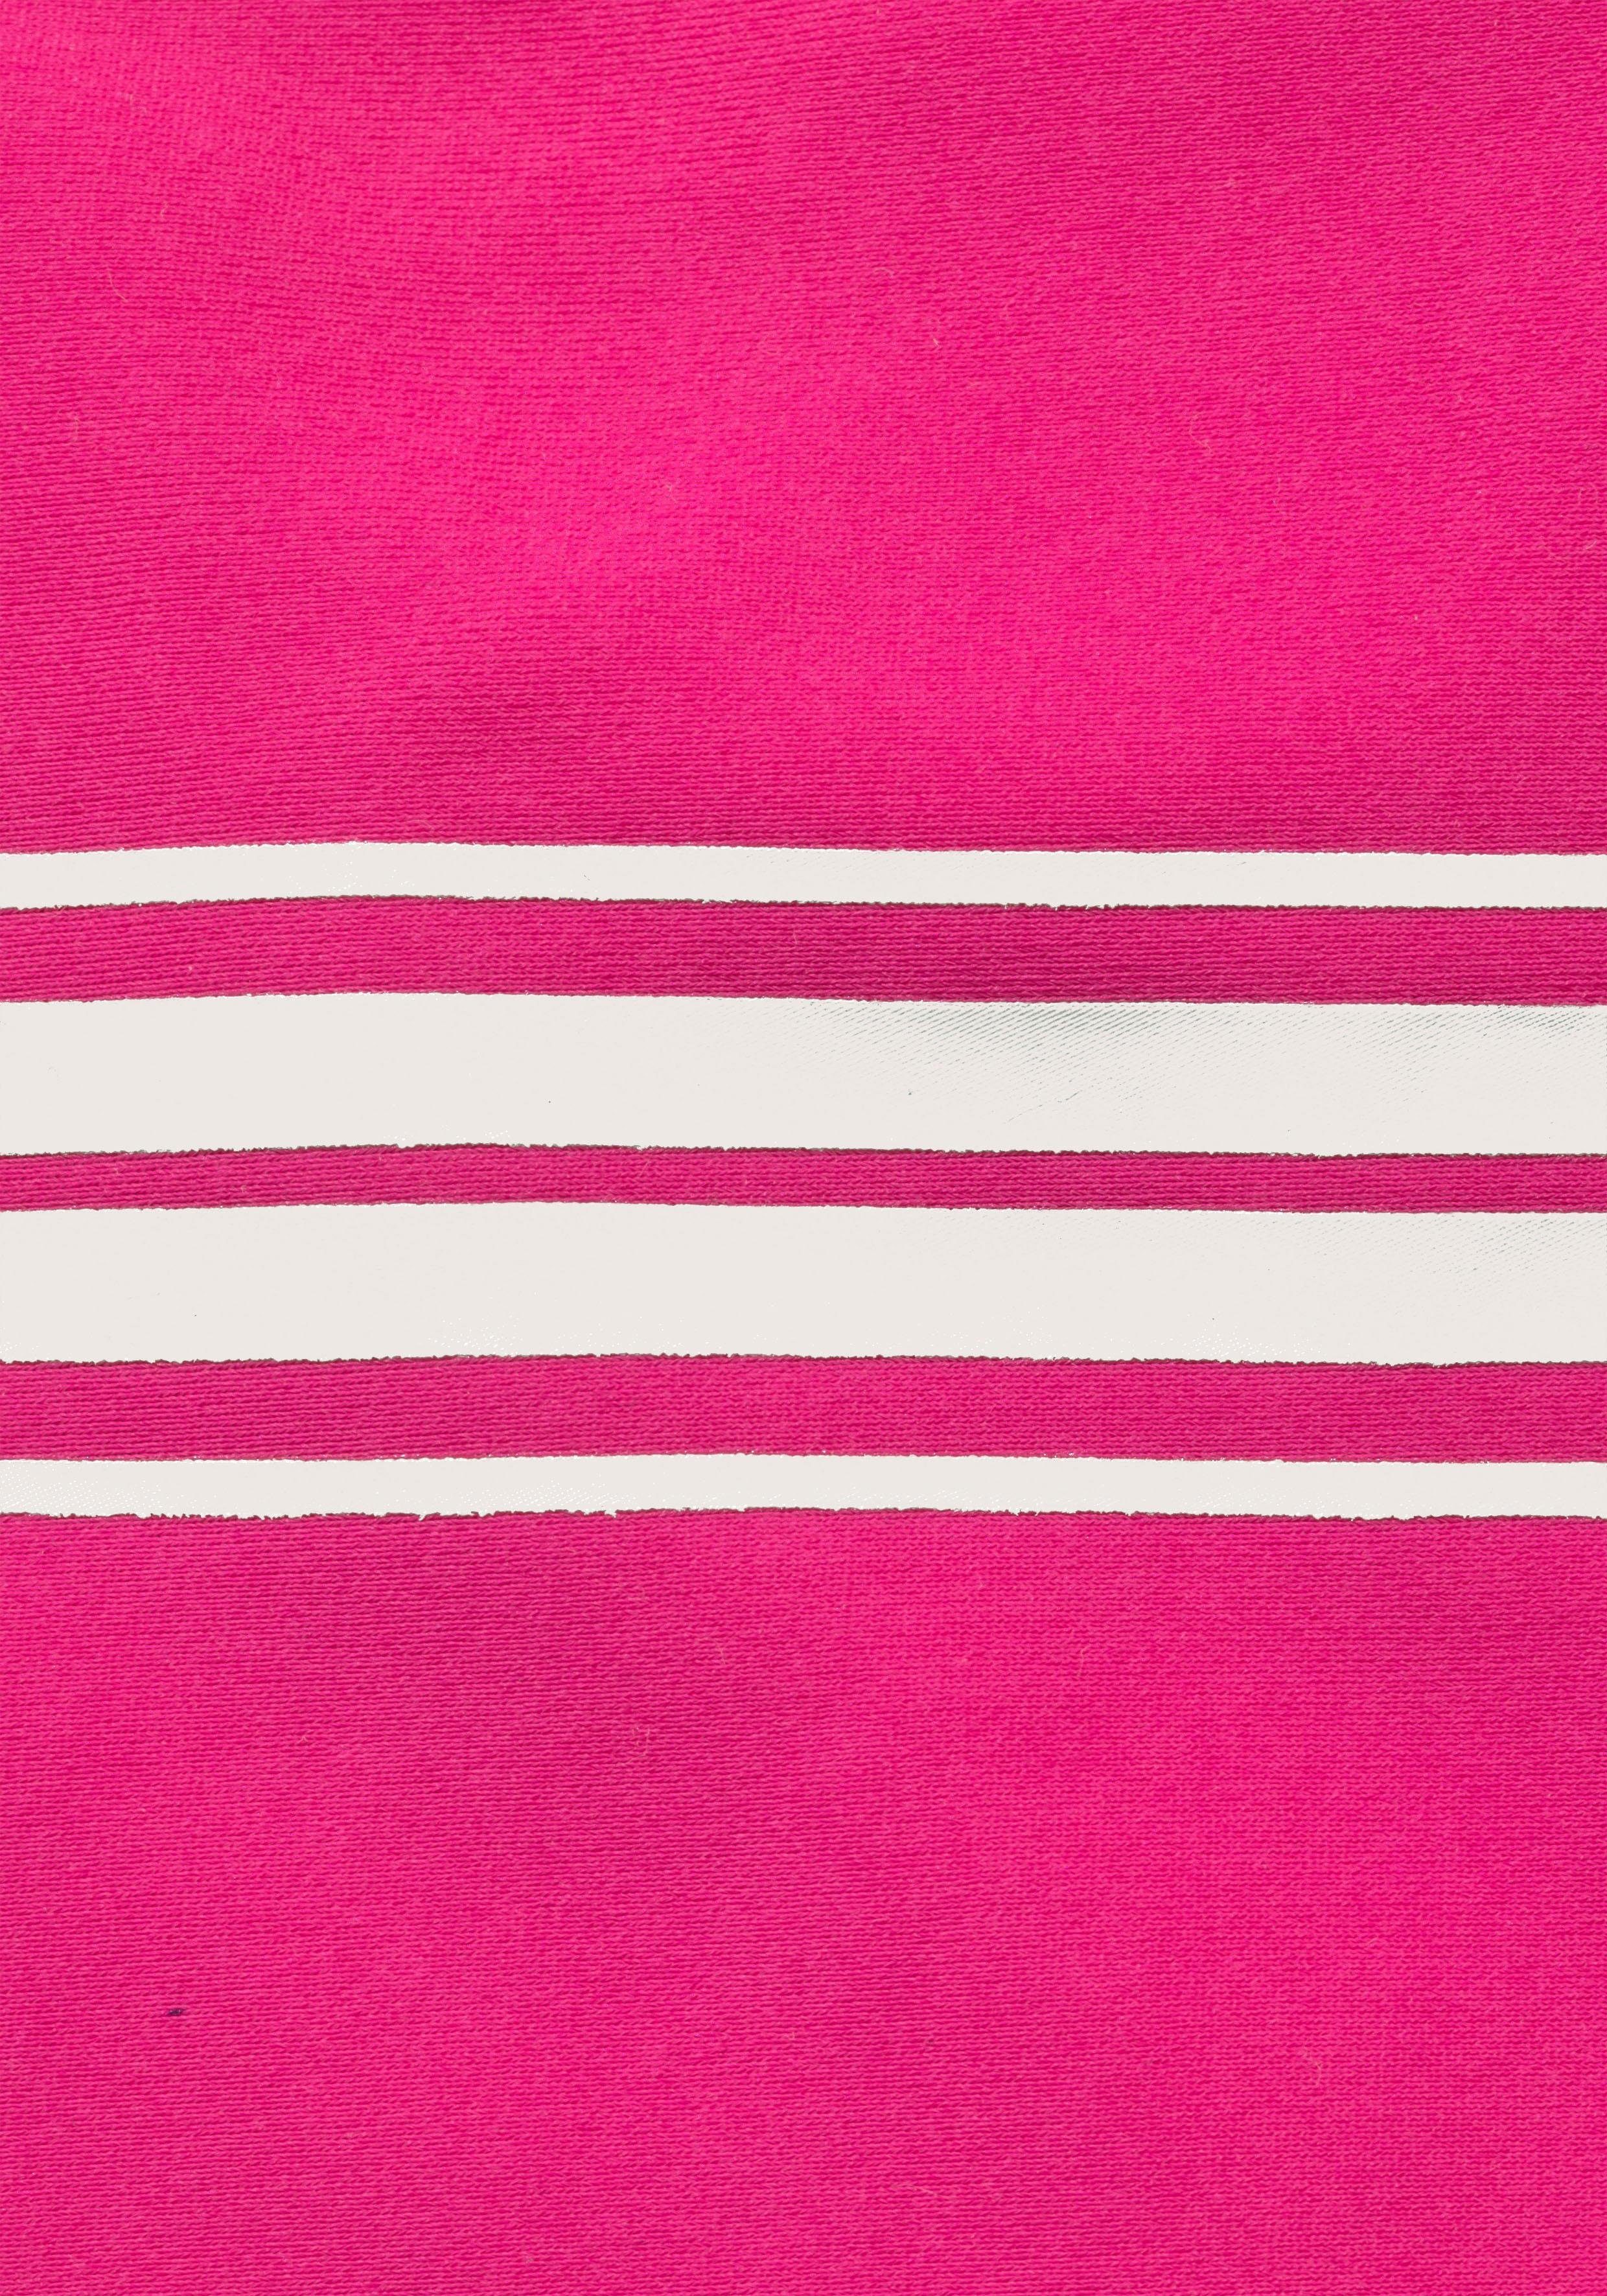 Frontdruck mit Sporty Tankini KangaROOS sportlichem pink